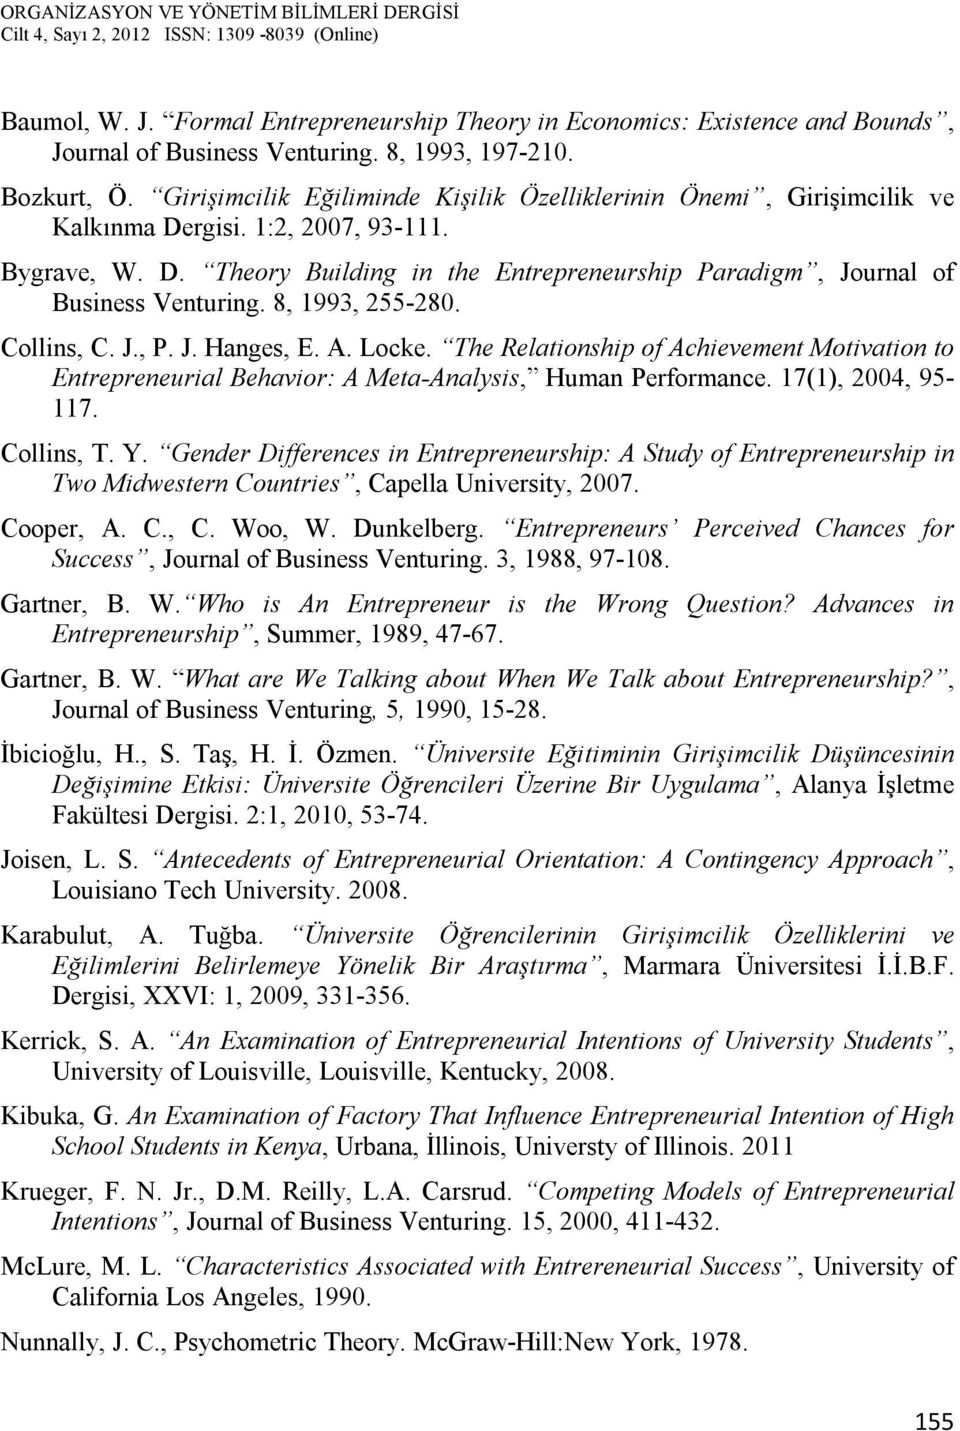 8, 1993, 255-280. Collins, C. J., P. J. Hanges, E. A. Locke. The Relationship of Achievement Motivation to Entrepreneurial Behavior: A Meta-Analysis, Human Performance. 17(1), 2004, 95-117.